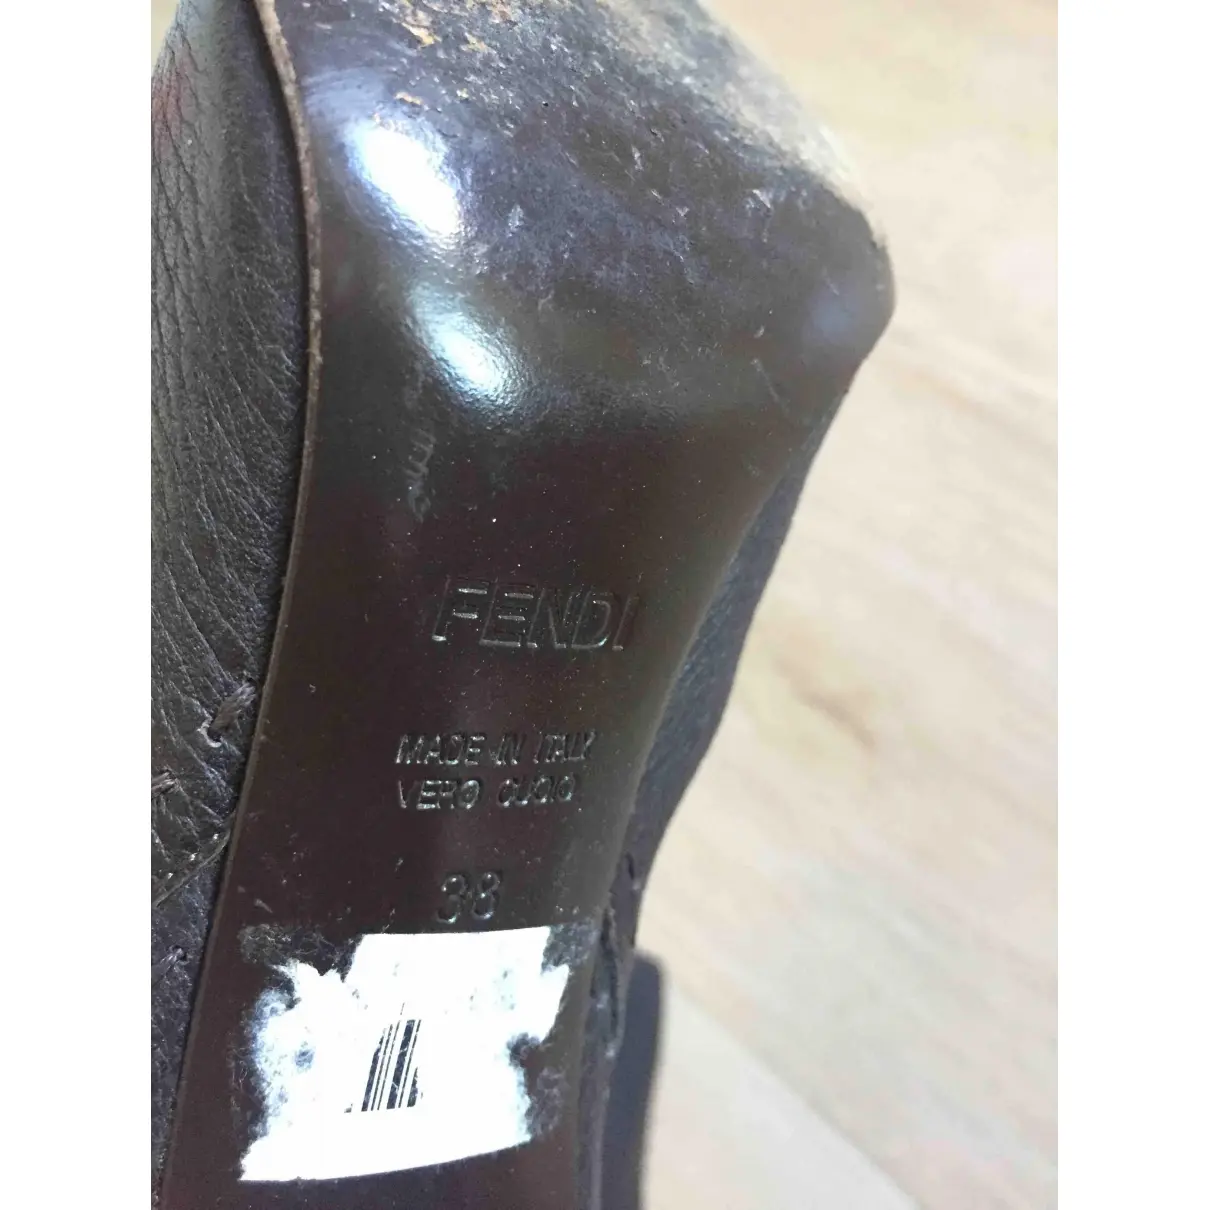 Buy Fendi Leather boots online